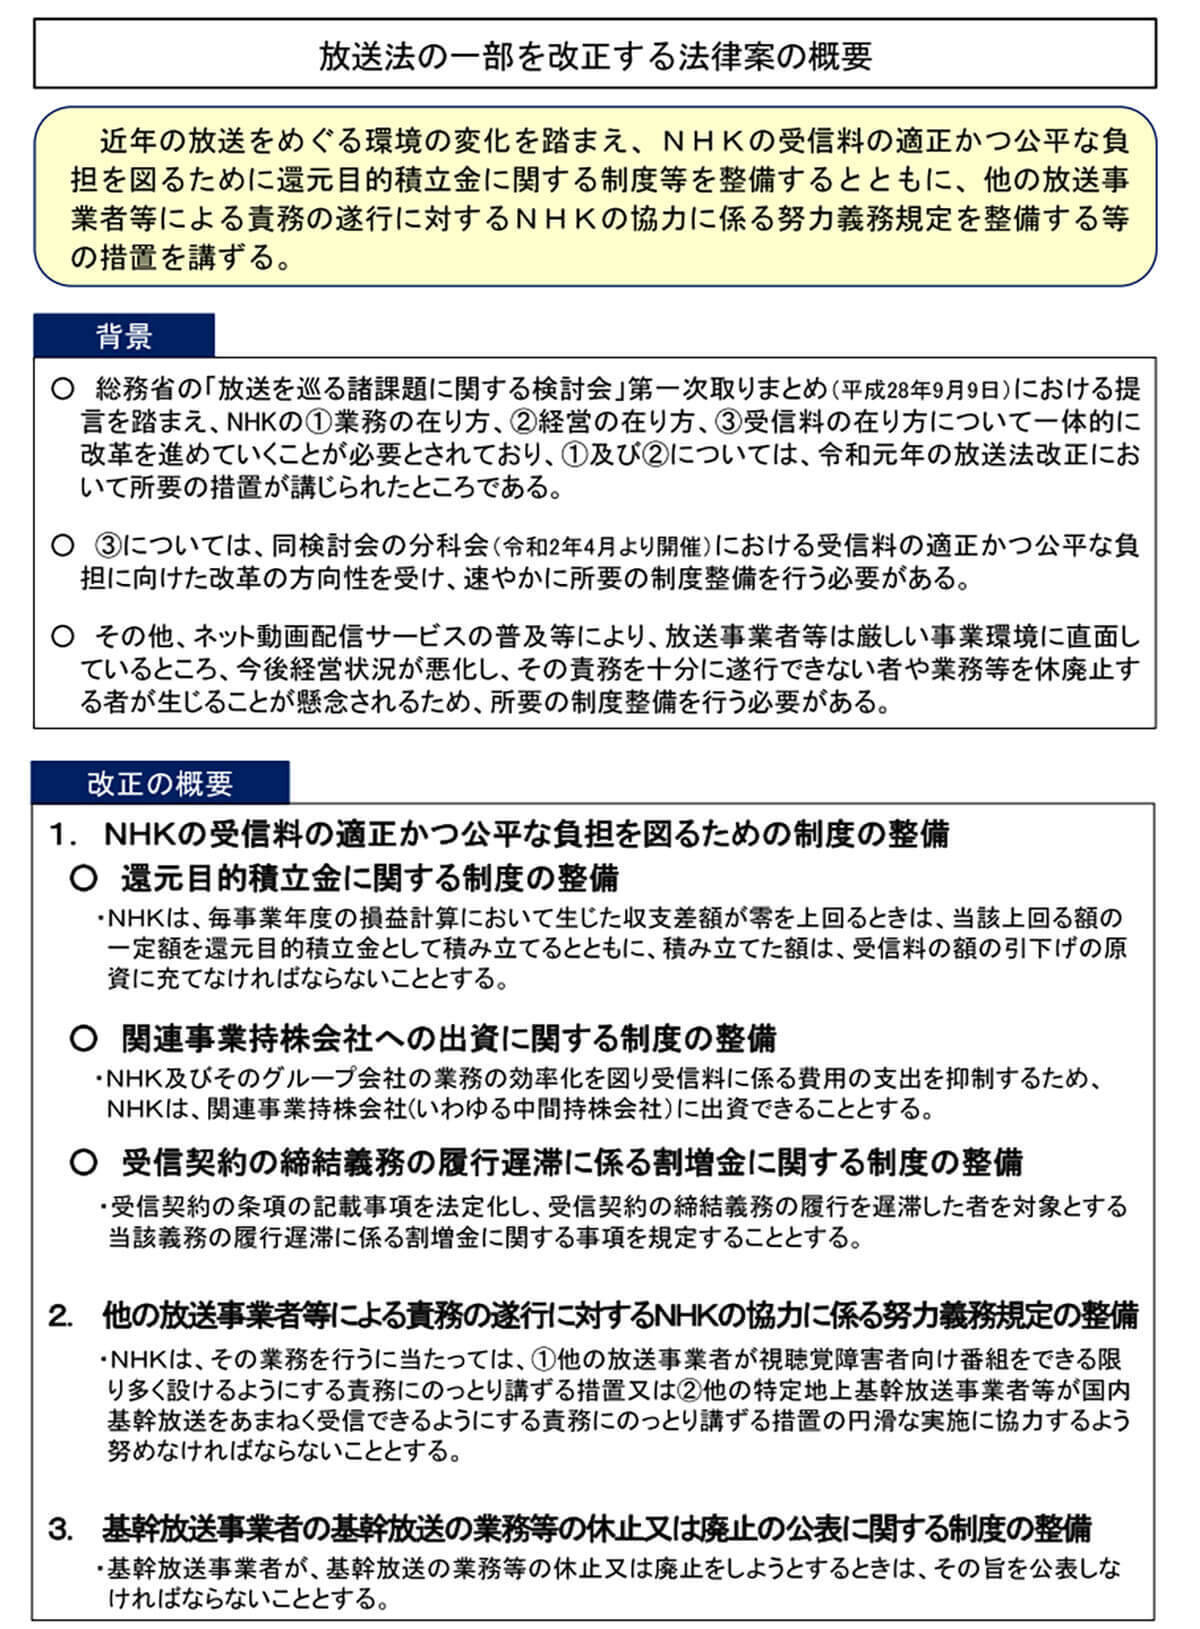 【NHK】23年4月から不正な受信料未払いは2倍の割増金を徴収すると発表!!